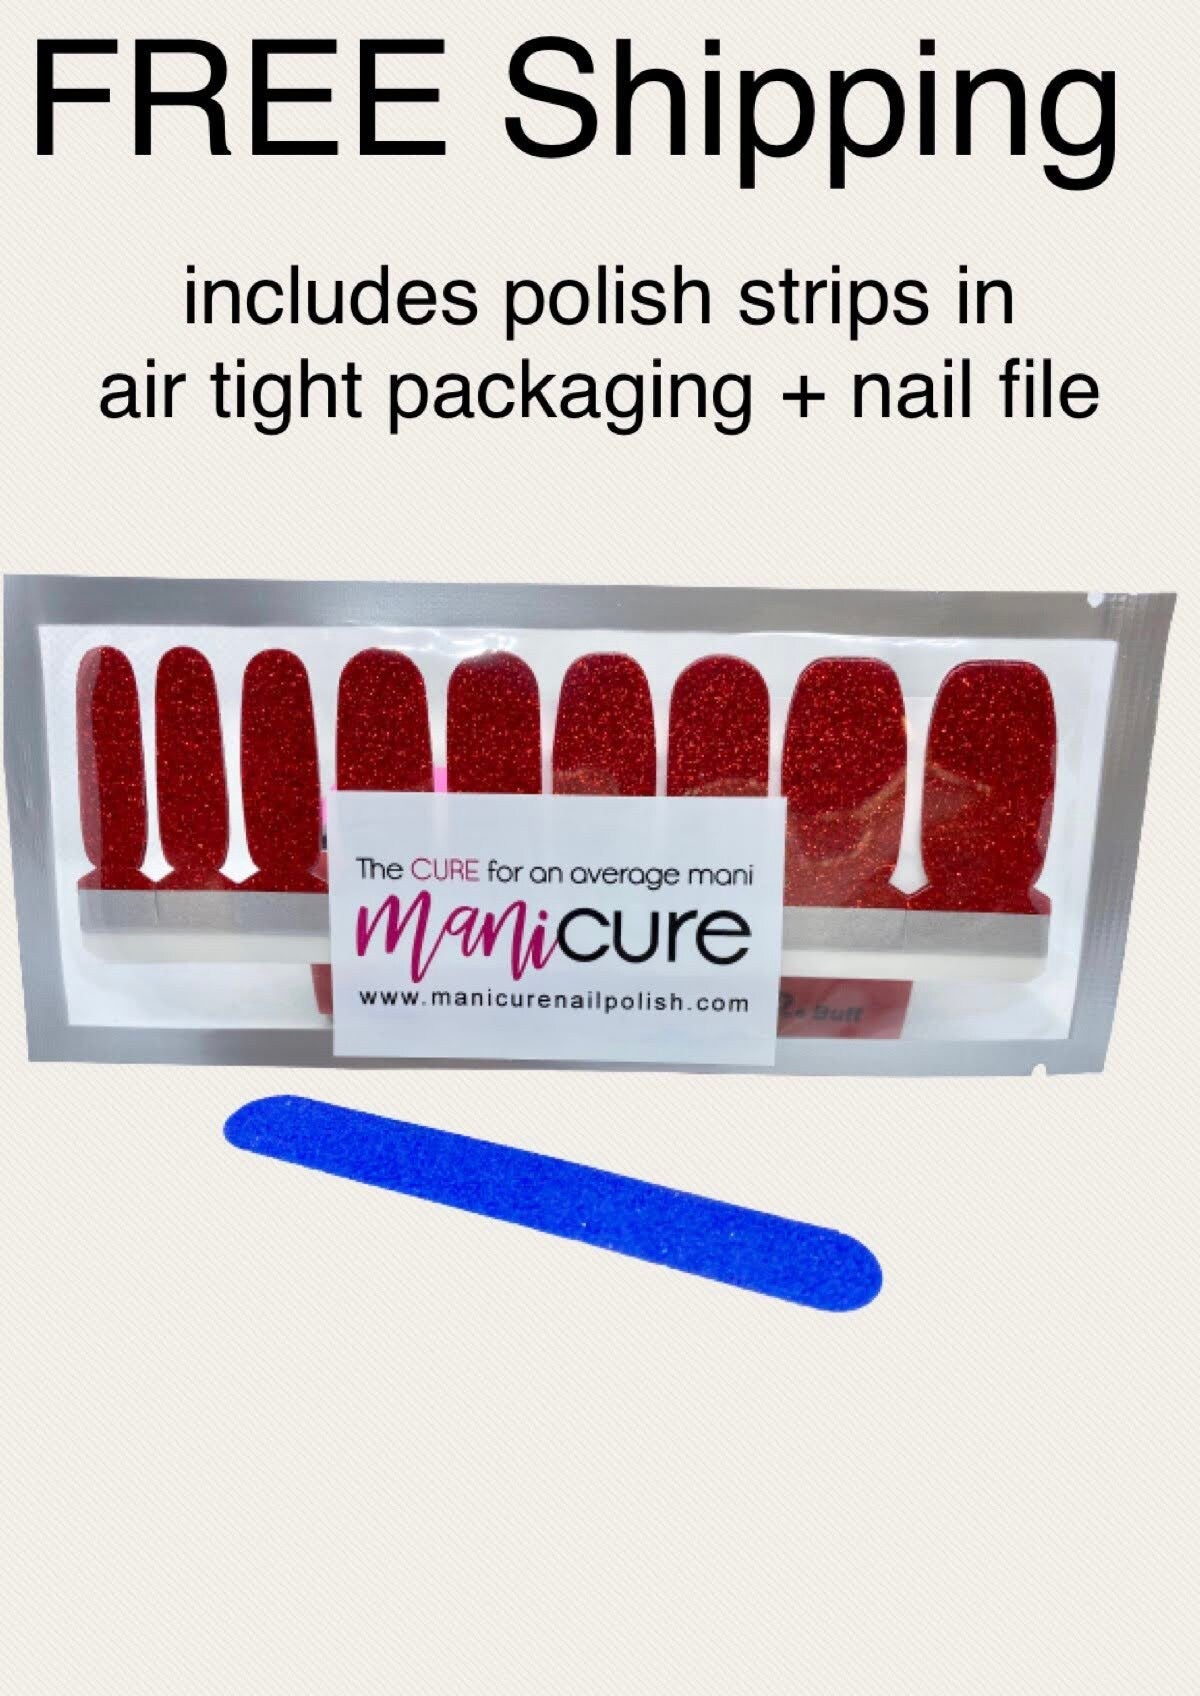 Midnight Colors Sparkle Glitter, ManiCURE  Real Nail Polish Strips, Dry Nail Polish, Nail Wraps, Stickers, Long Lasting, Non Toxic - manicurenailpolish